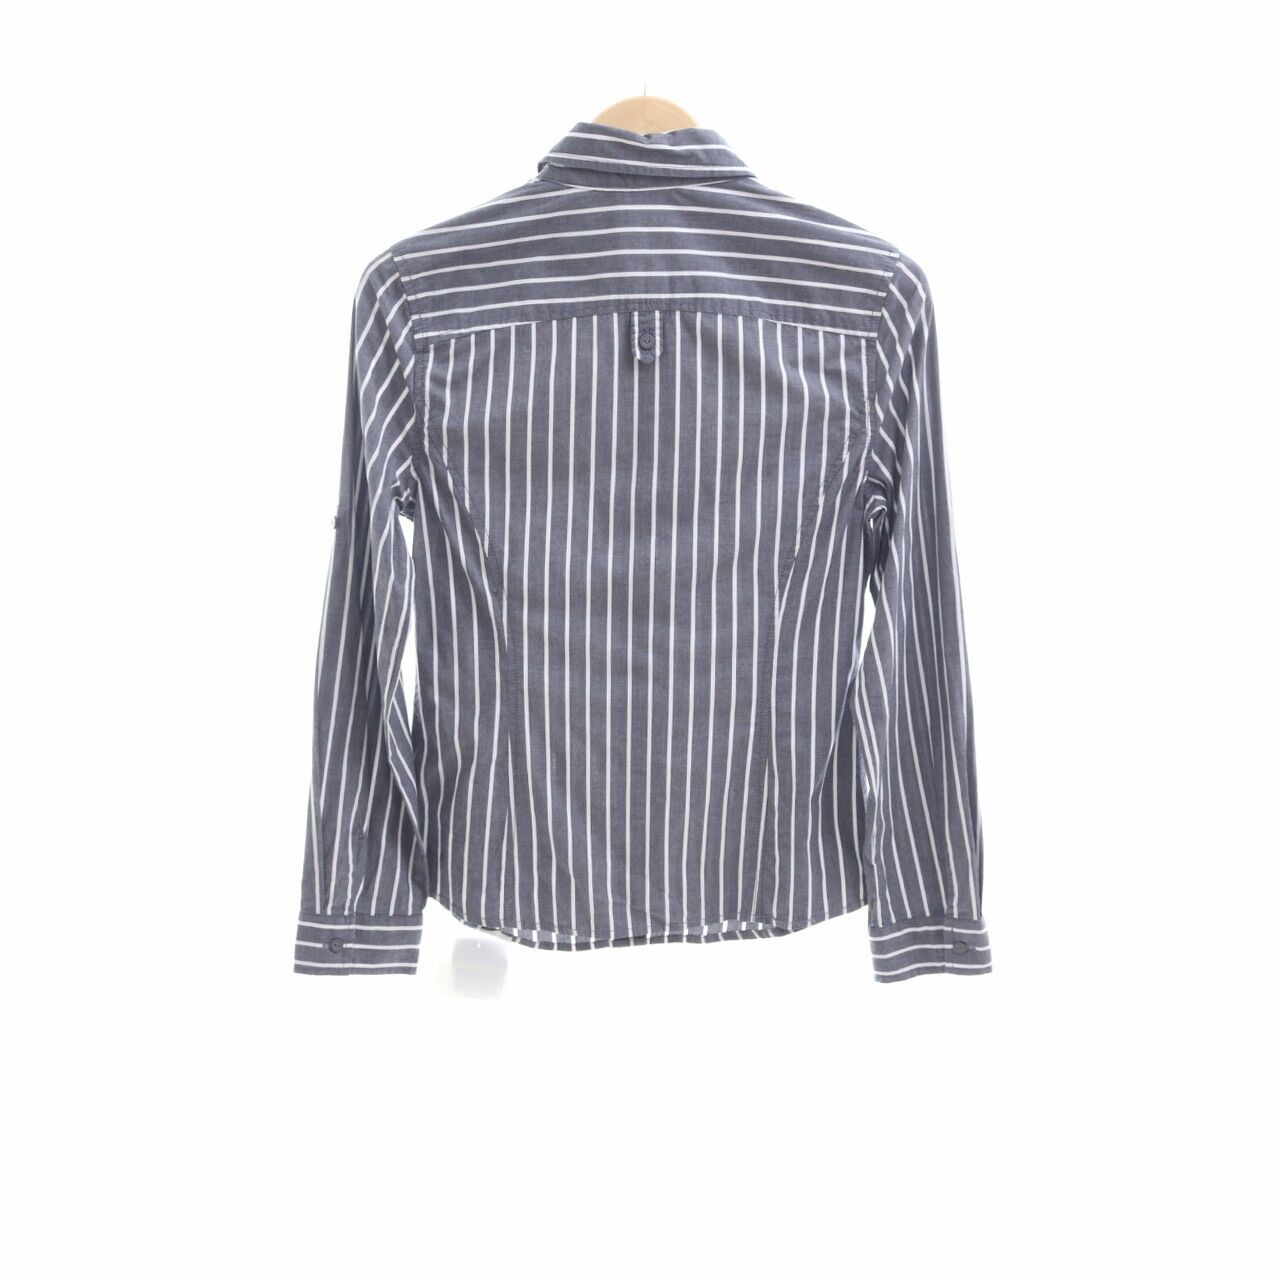 Bossini Grey & White Stripes Shirt